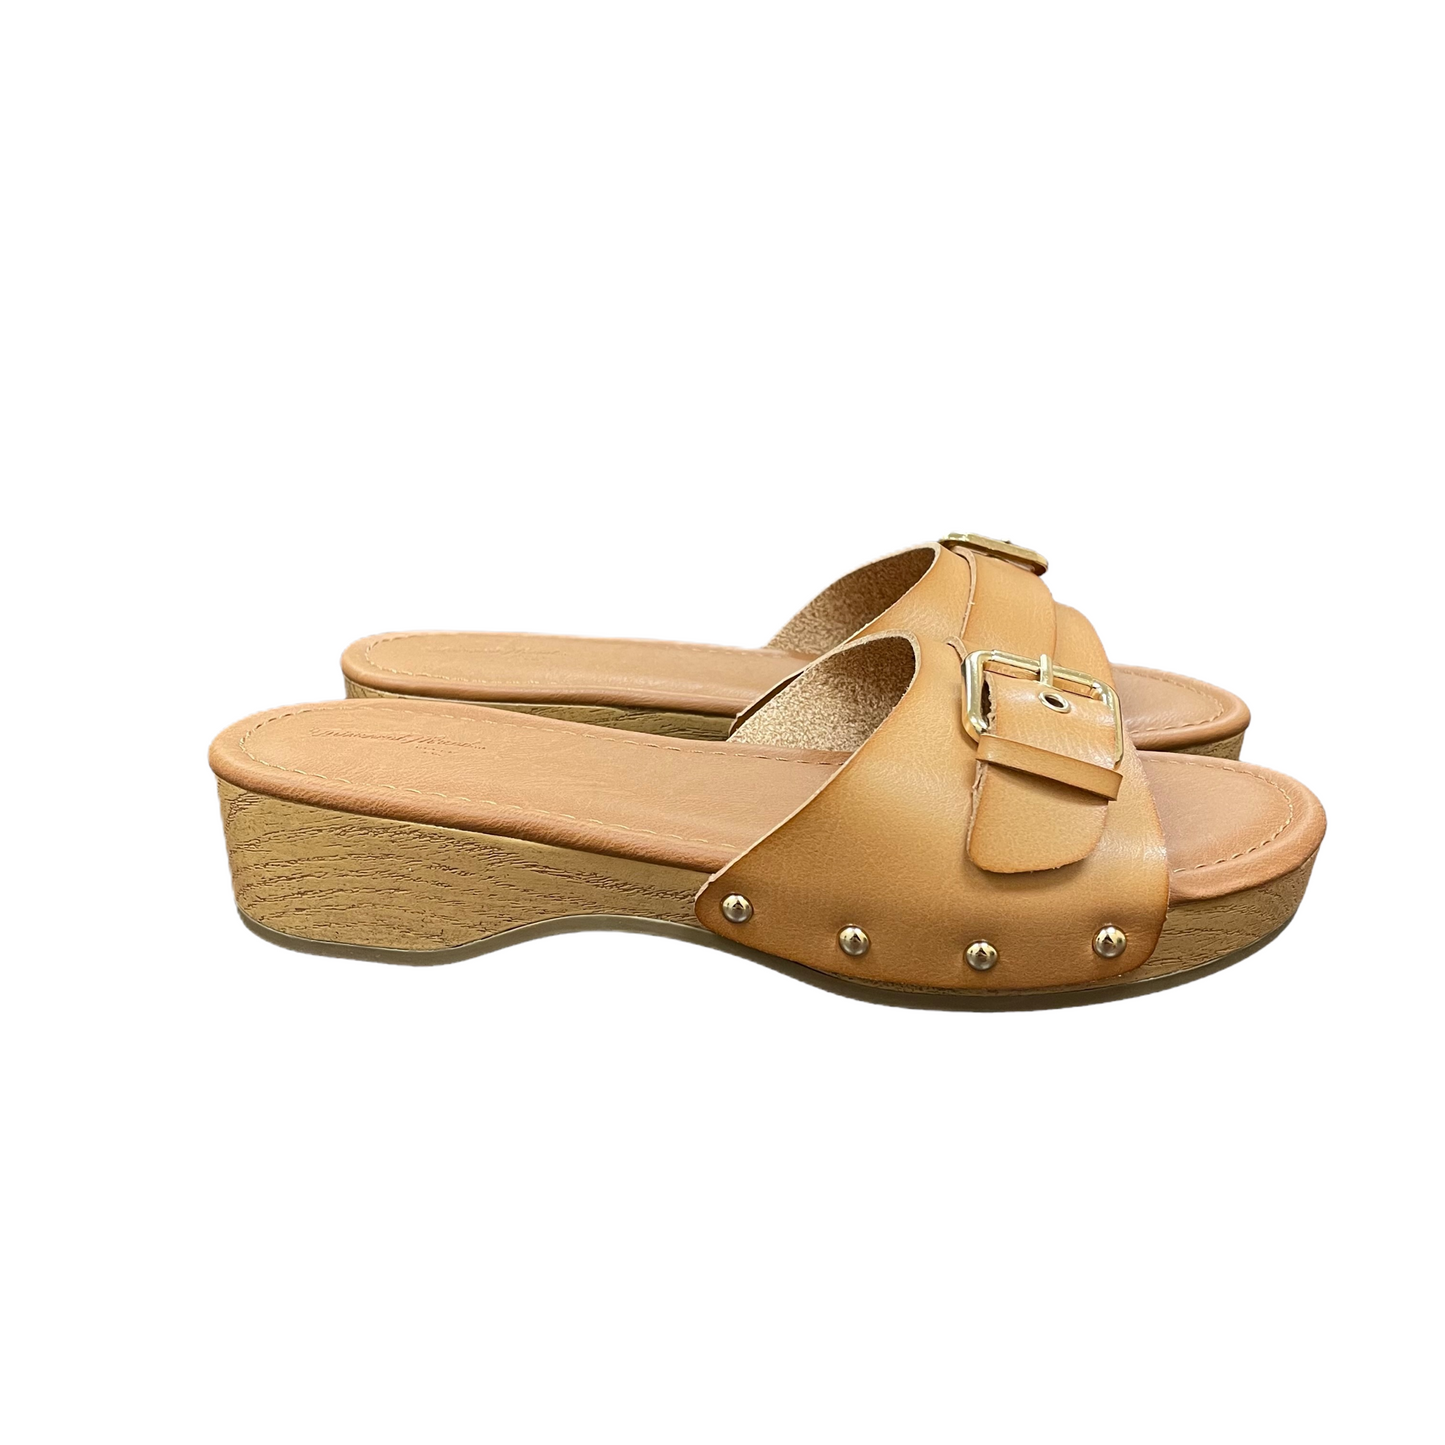 Brown Sandals Heels Block By Universal Thread, Size: 7.5